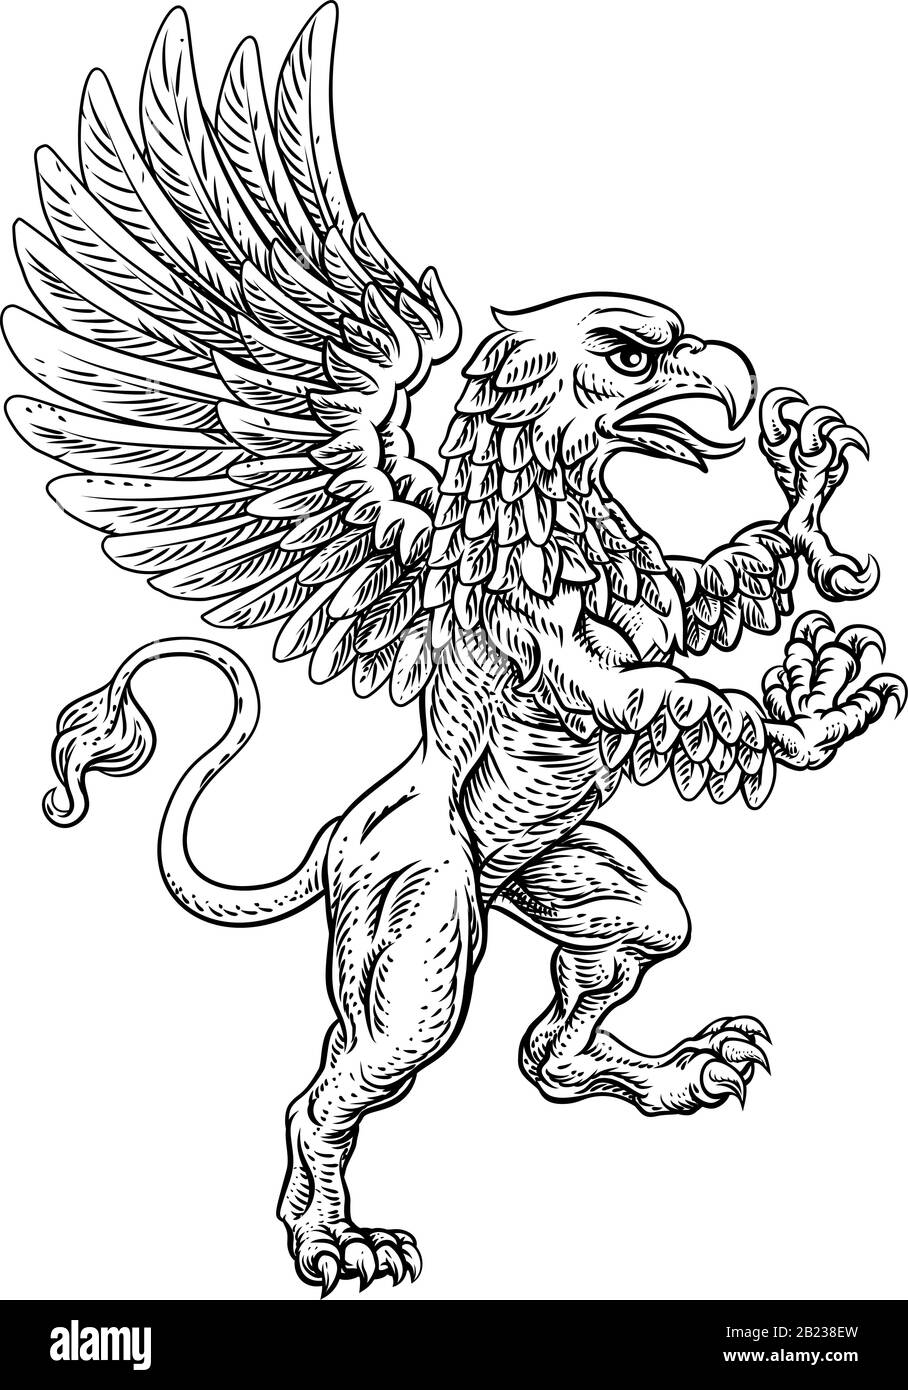 Griffon Zügellte Gryphon Wappen Crest Mascot Stock Vektor